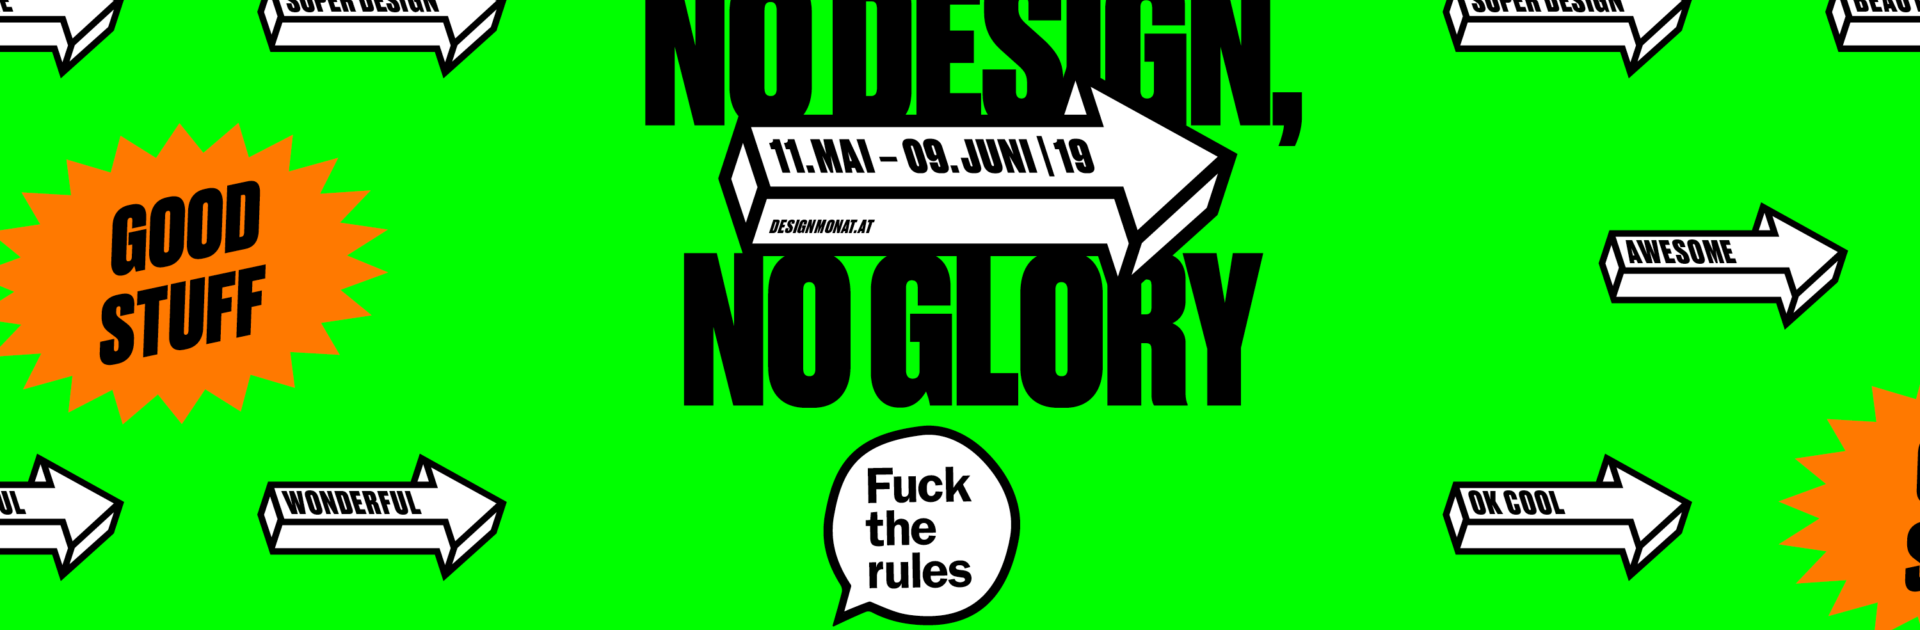 No Design, no Glory als Motto für den DMG19